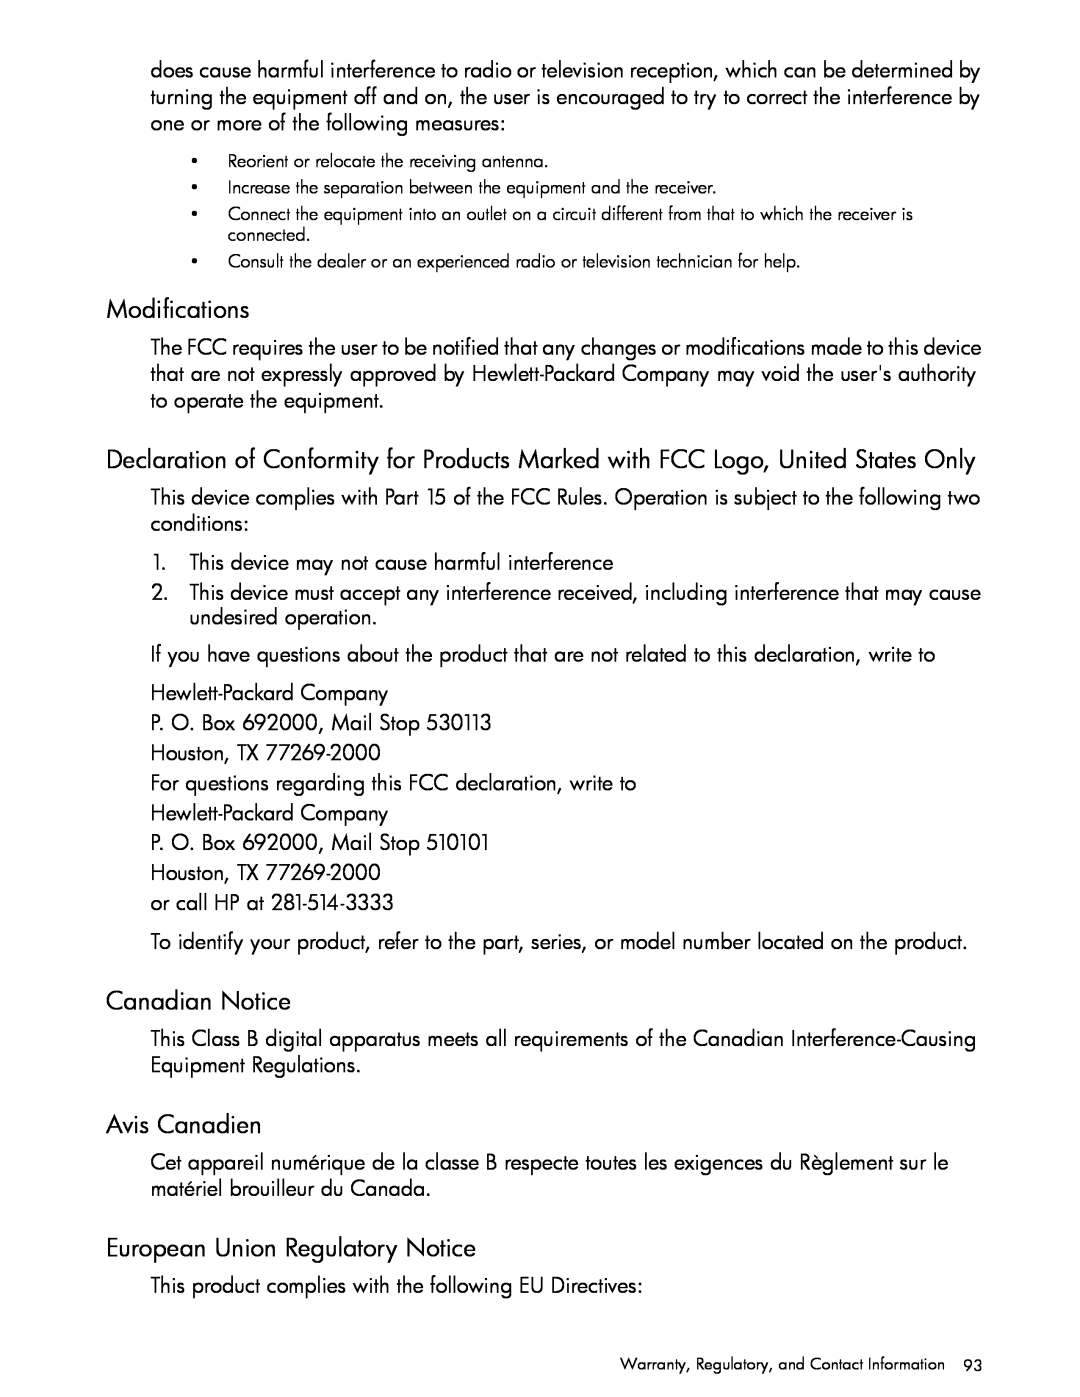 HP 30b Professional manual Modifications, Canadian Notice, Avis Canadien, European Union Regulatory Notice 